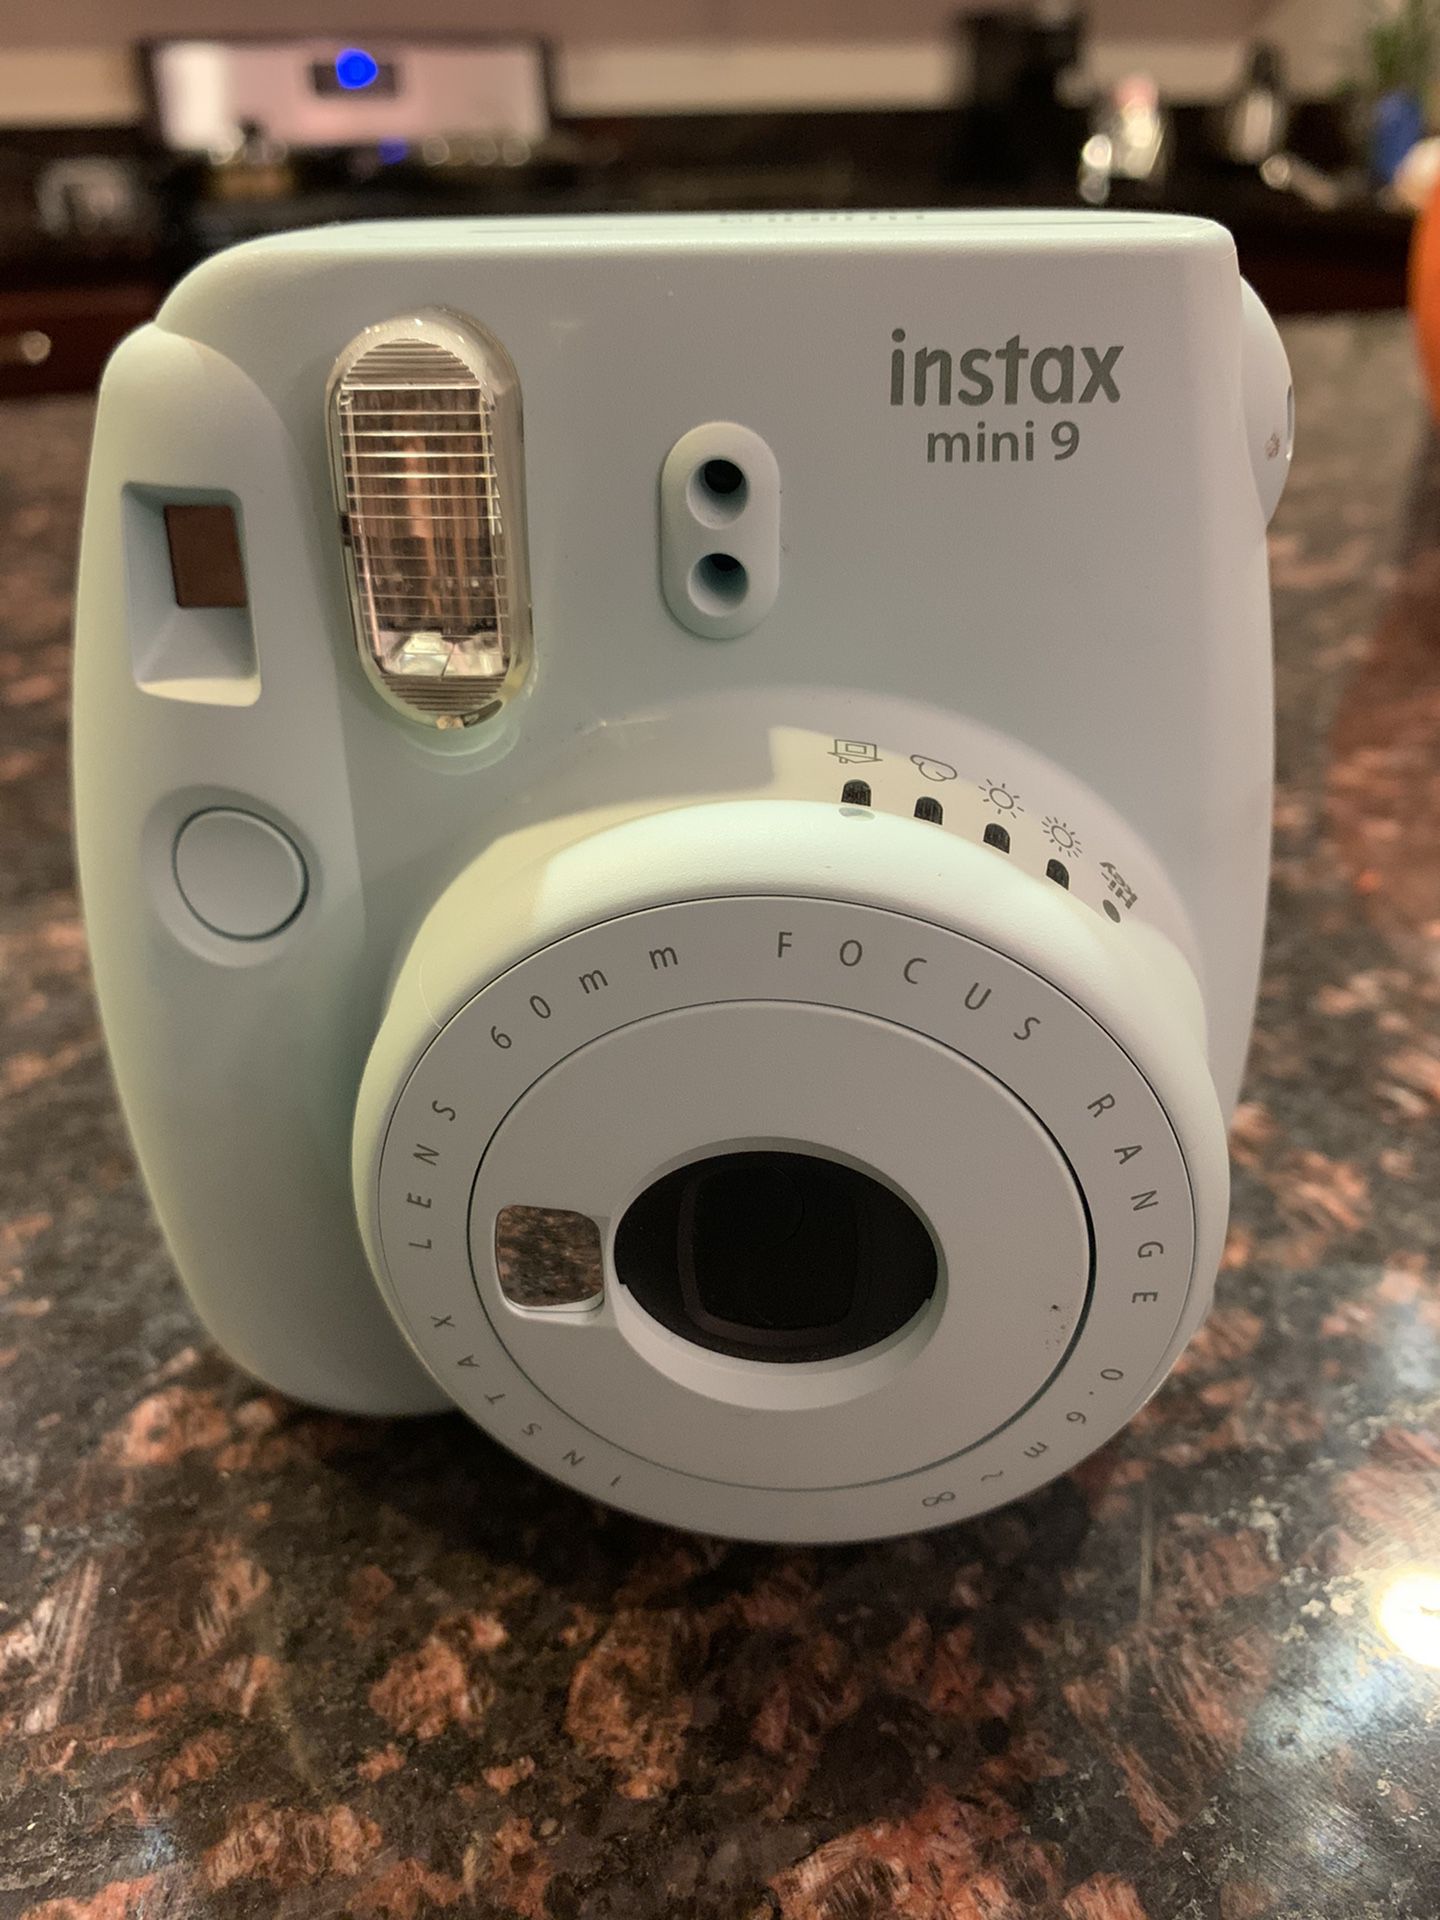 Fuji Instax mini 9 camera for sale